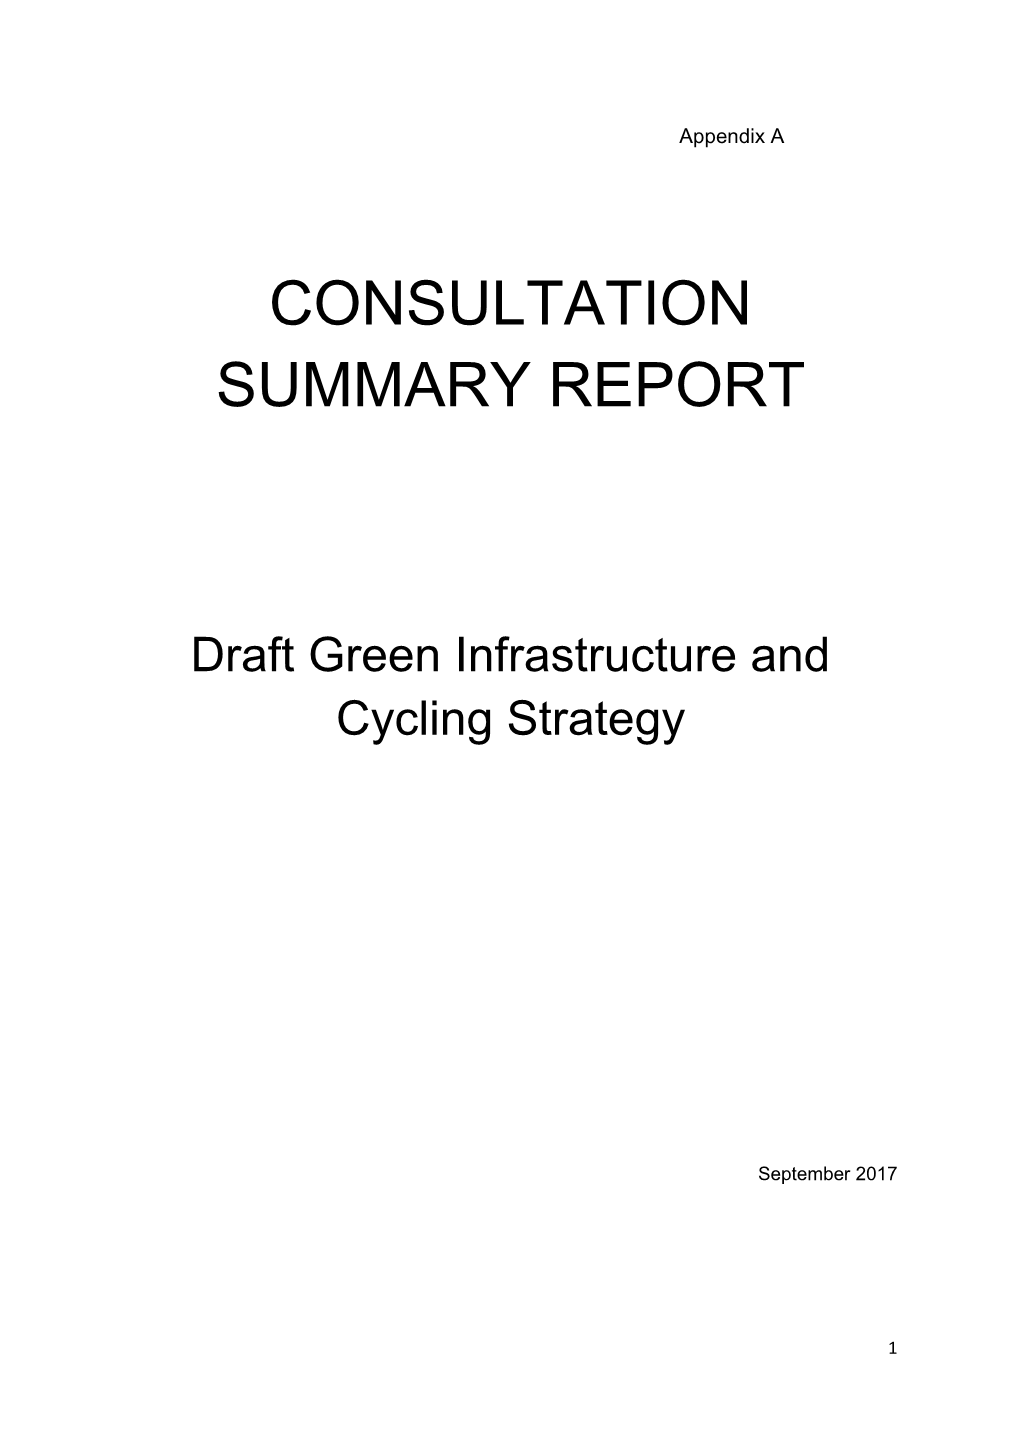 Consultation Summary Report